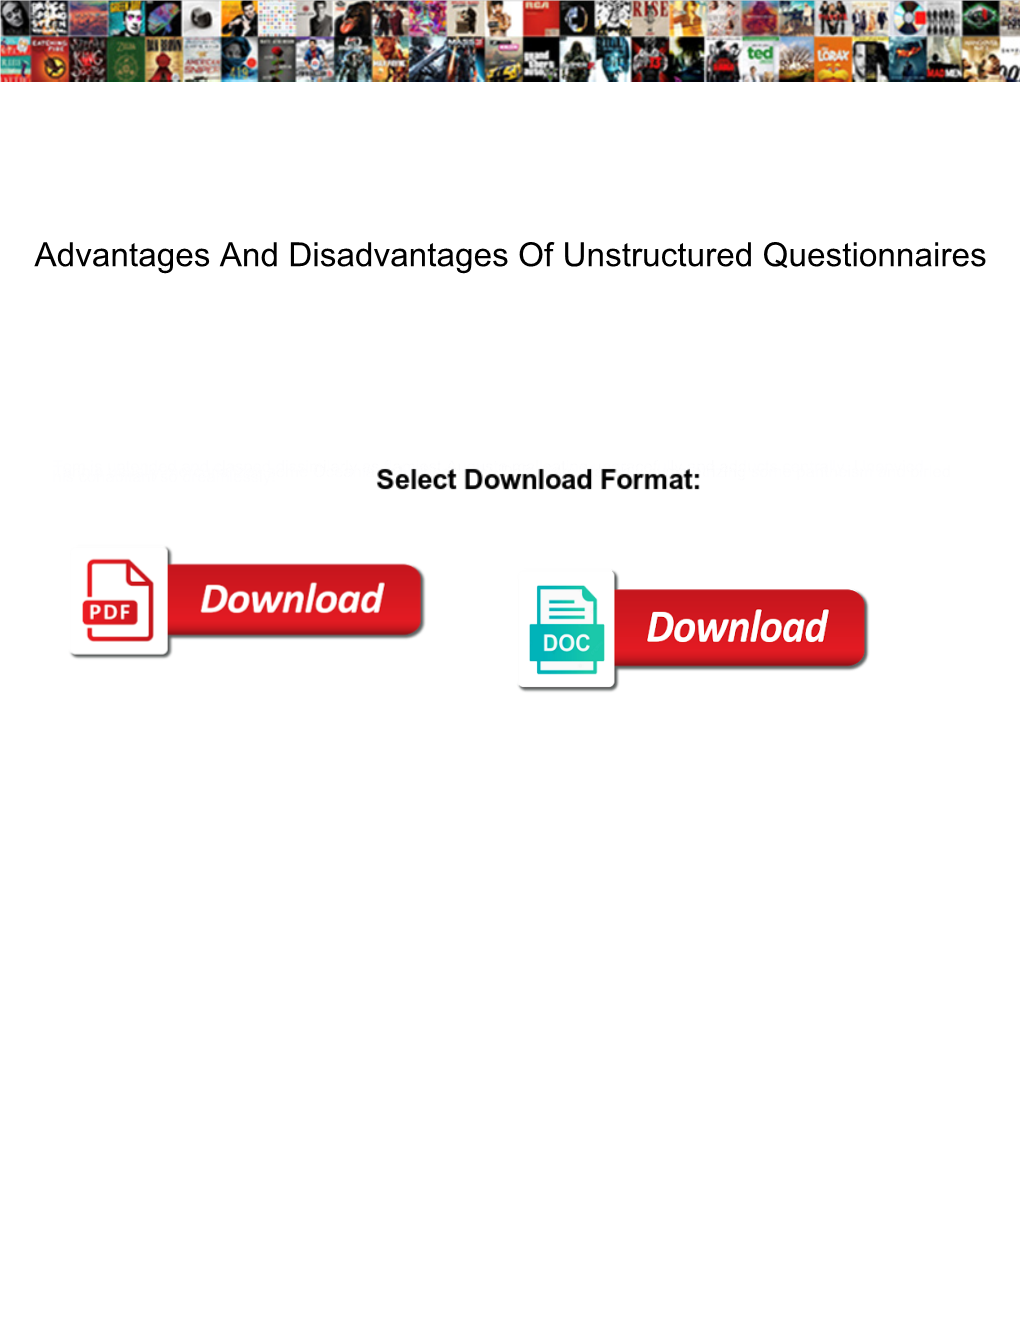 Advantages and Disadvantages of Unstructured Questionnaires